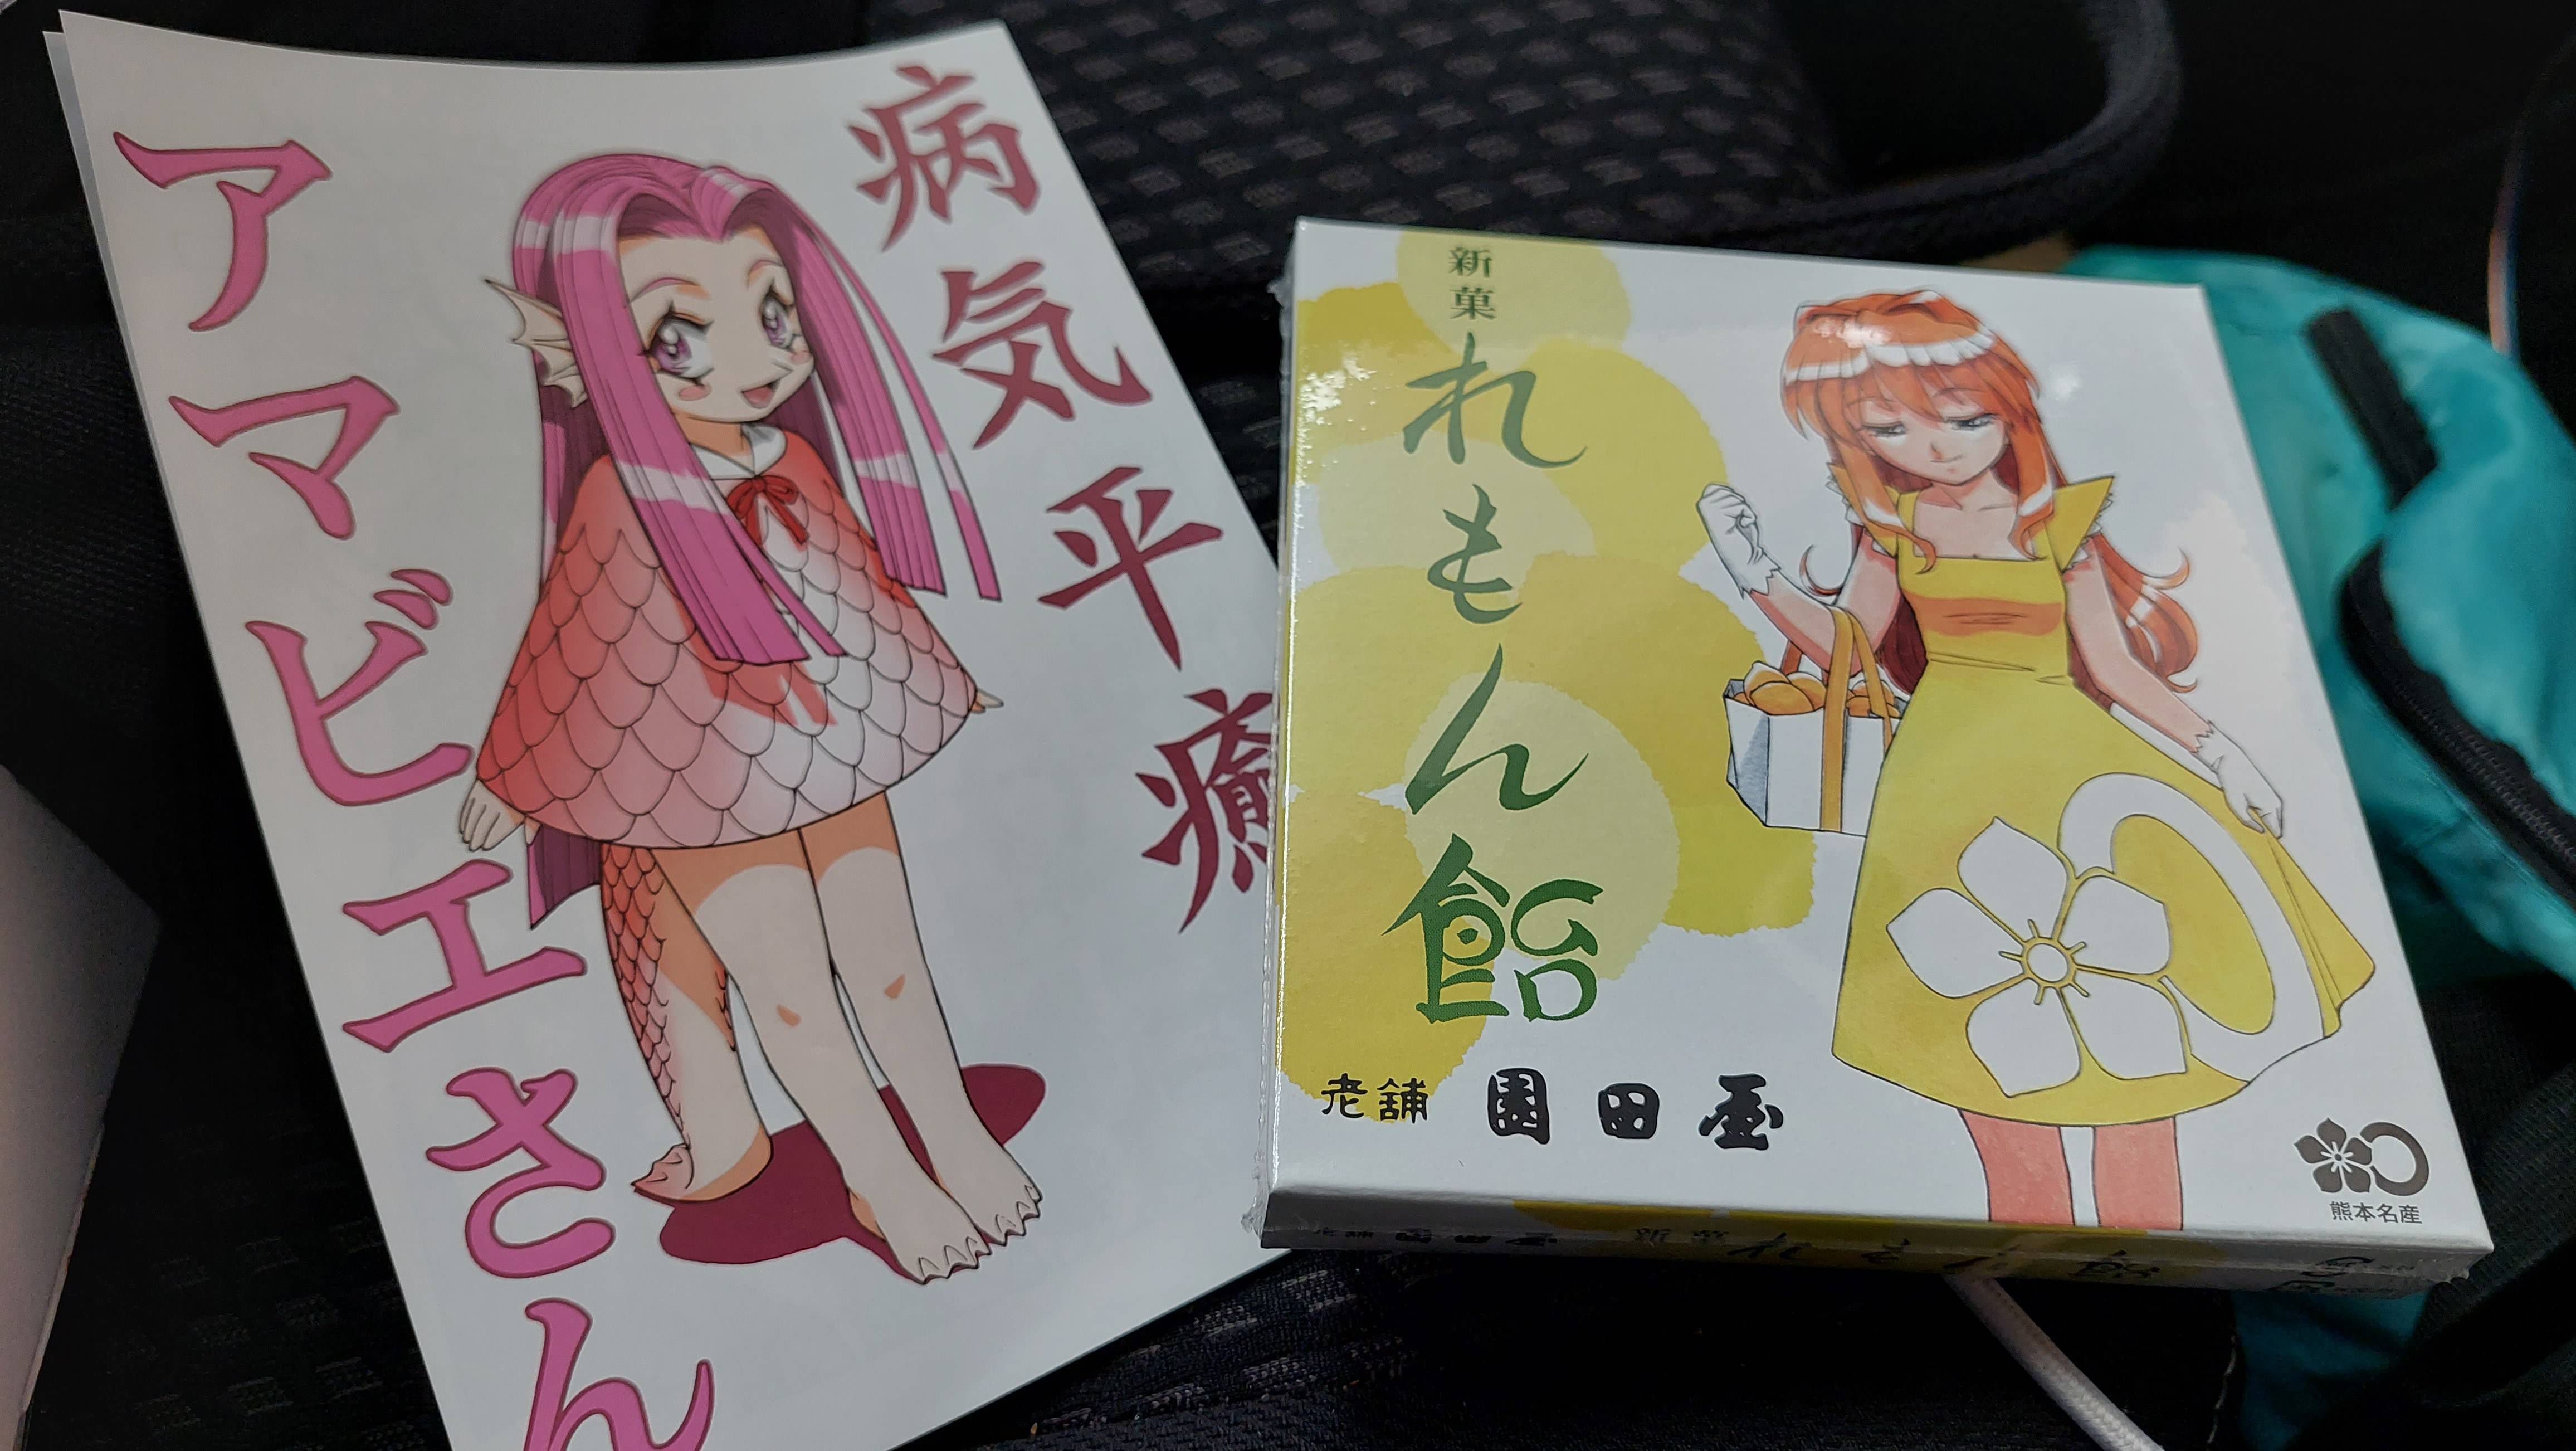 【Good news】Beautiful girl mahjong game "Suu Kyi Pie" that had nipples was also reprinted on Switch 7